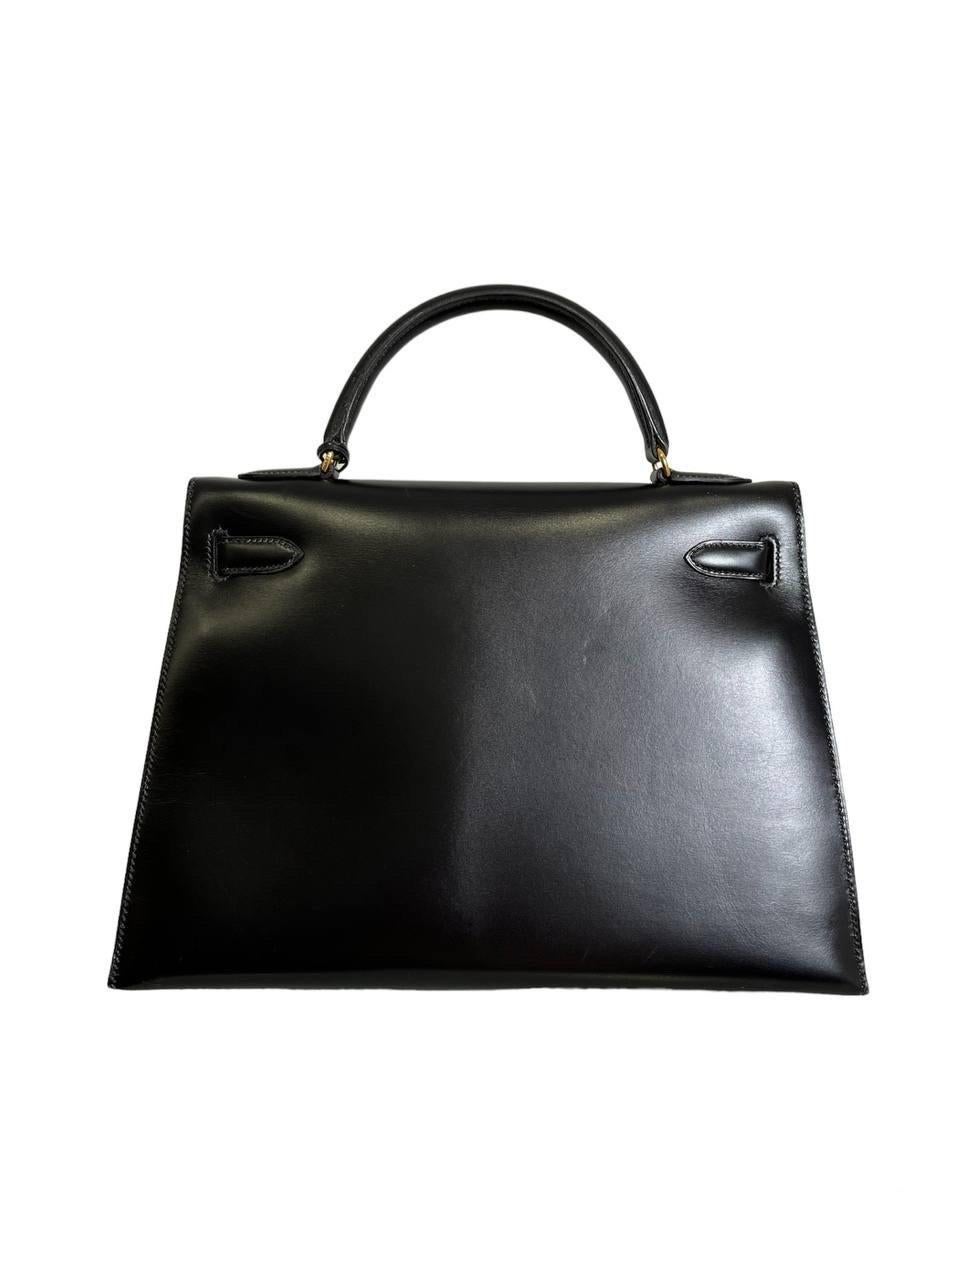 1991 Hermès Kelly 32 Box Calf Noir Top Handle Bag 6